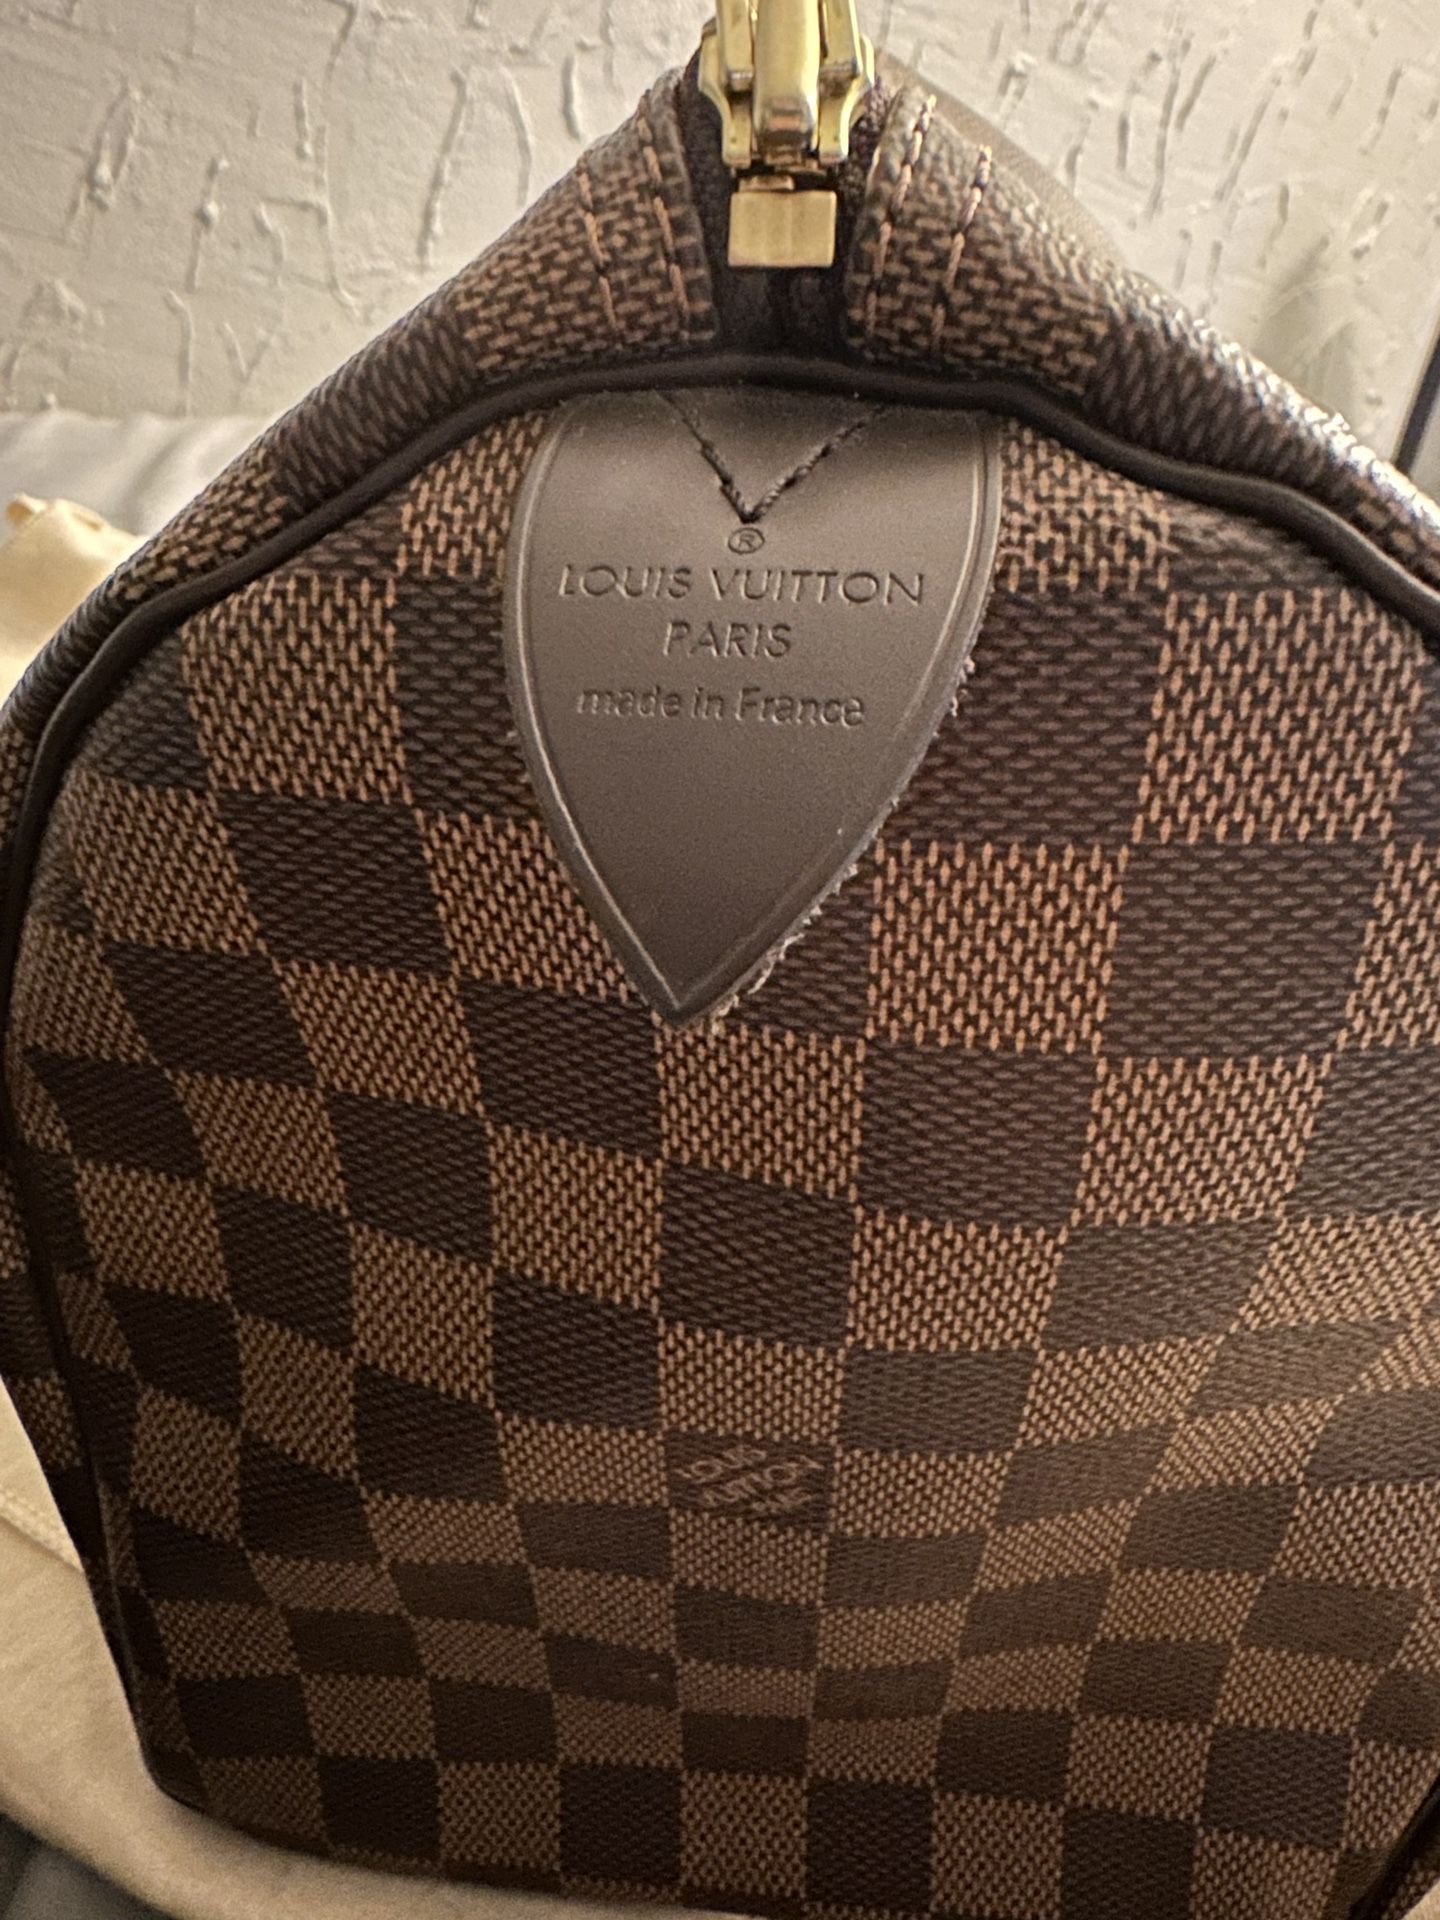 Louis Vuitton Speedy 30 for Sale in Santa Monica, CA - OfferUp